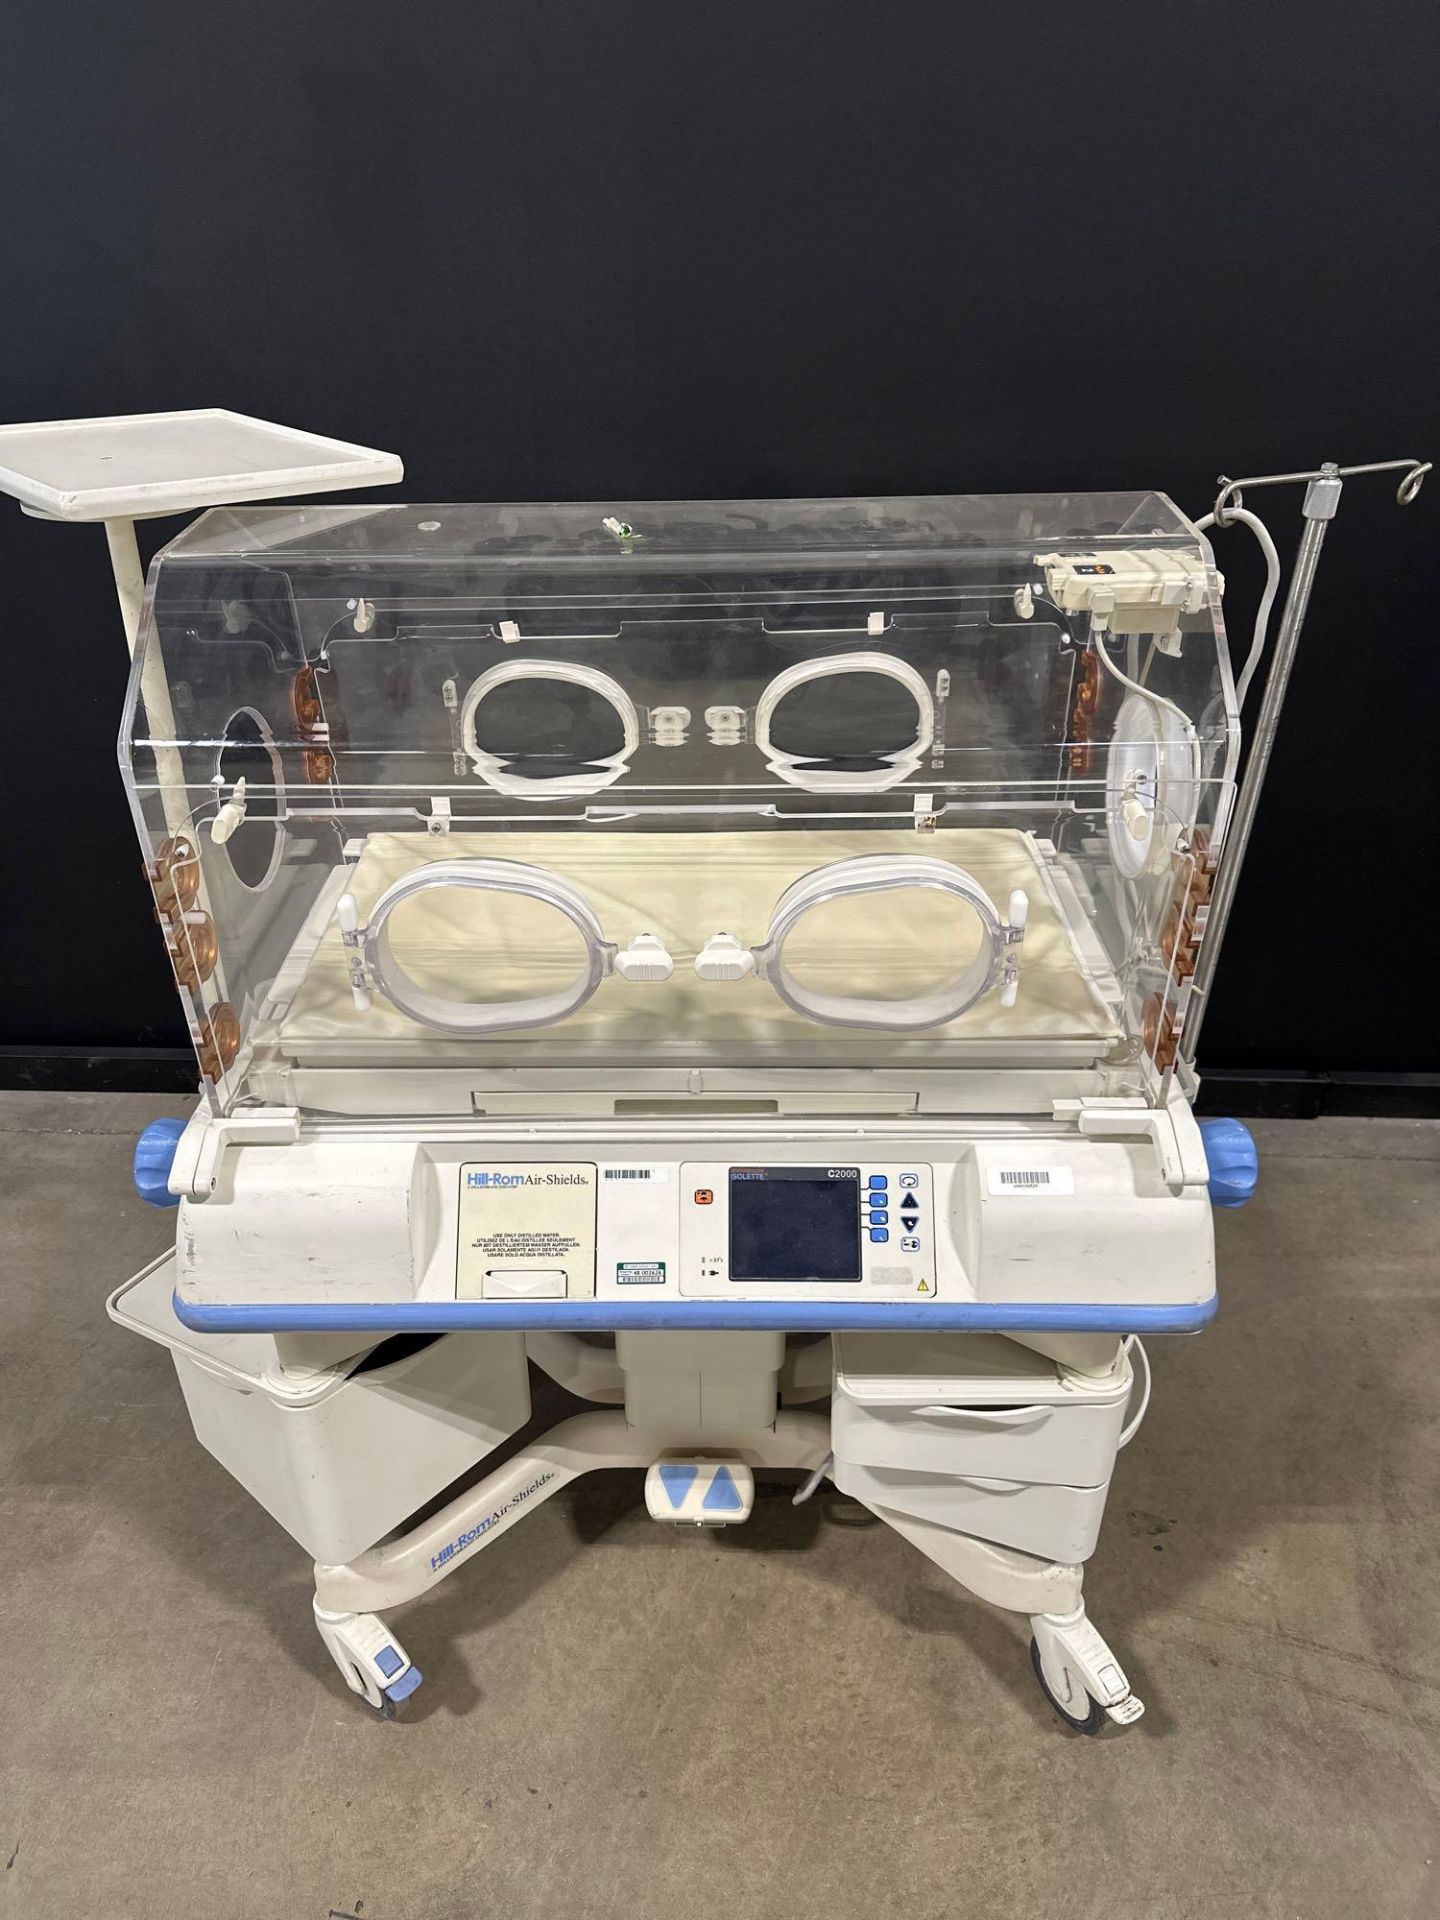 HILL-ROM/AIR-SHIELDS ISOLETTE C2000 INFANT INCUBATOR